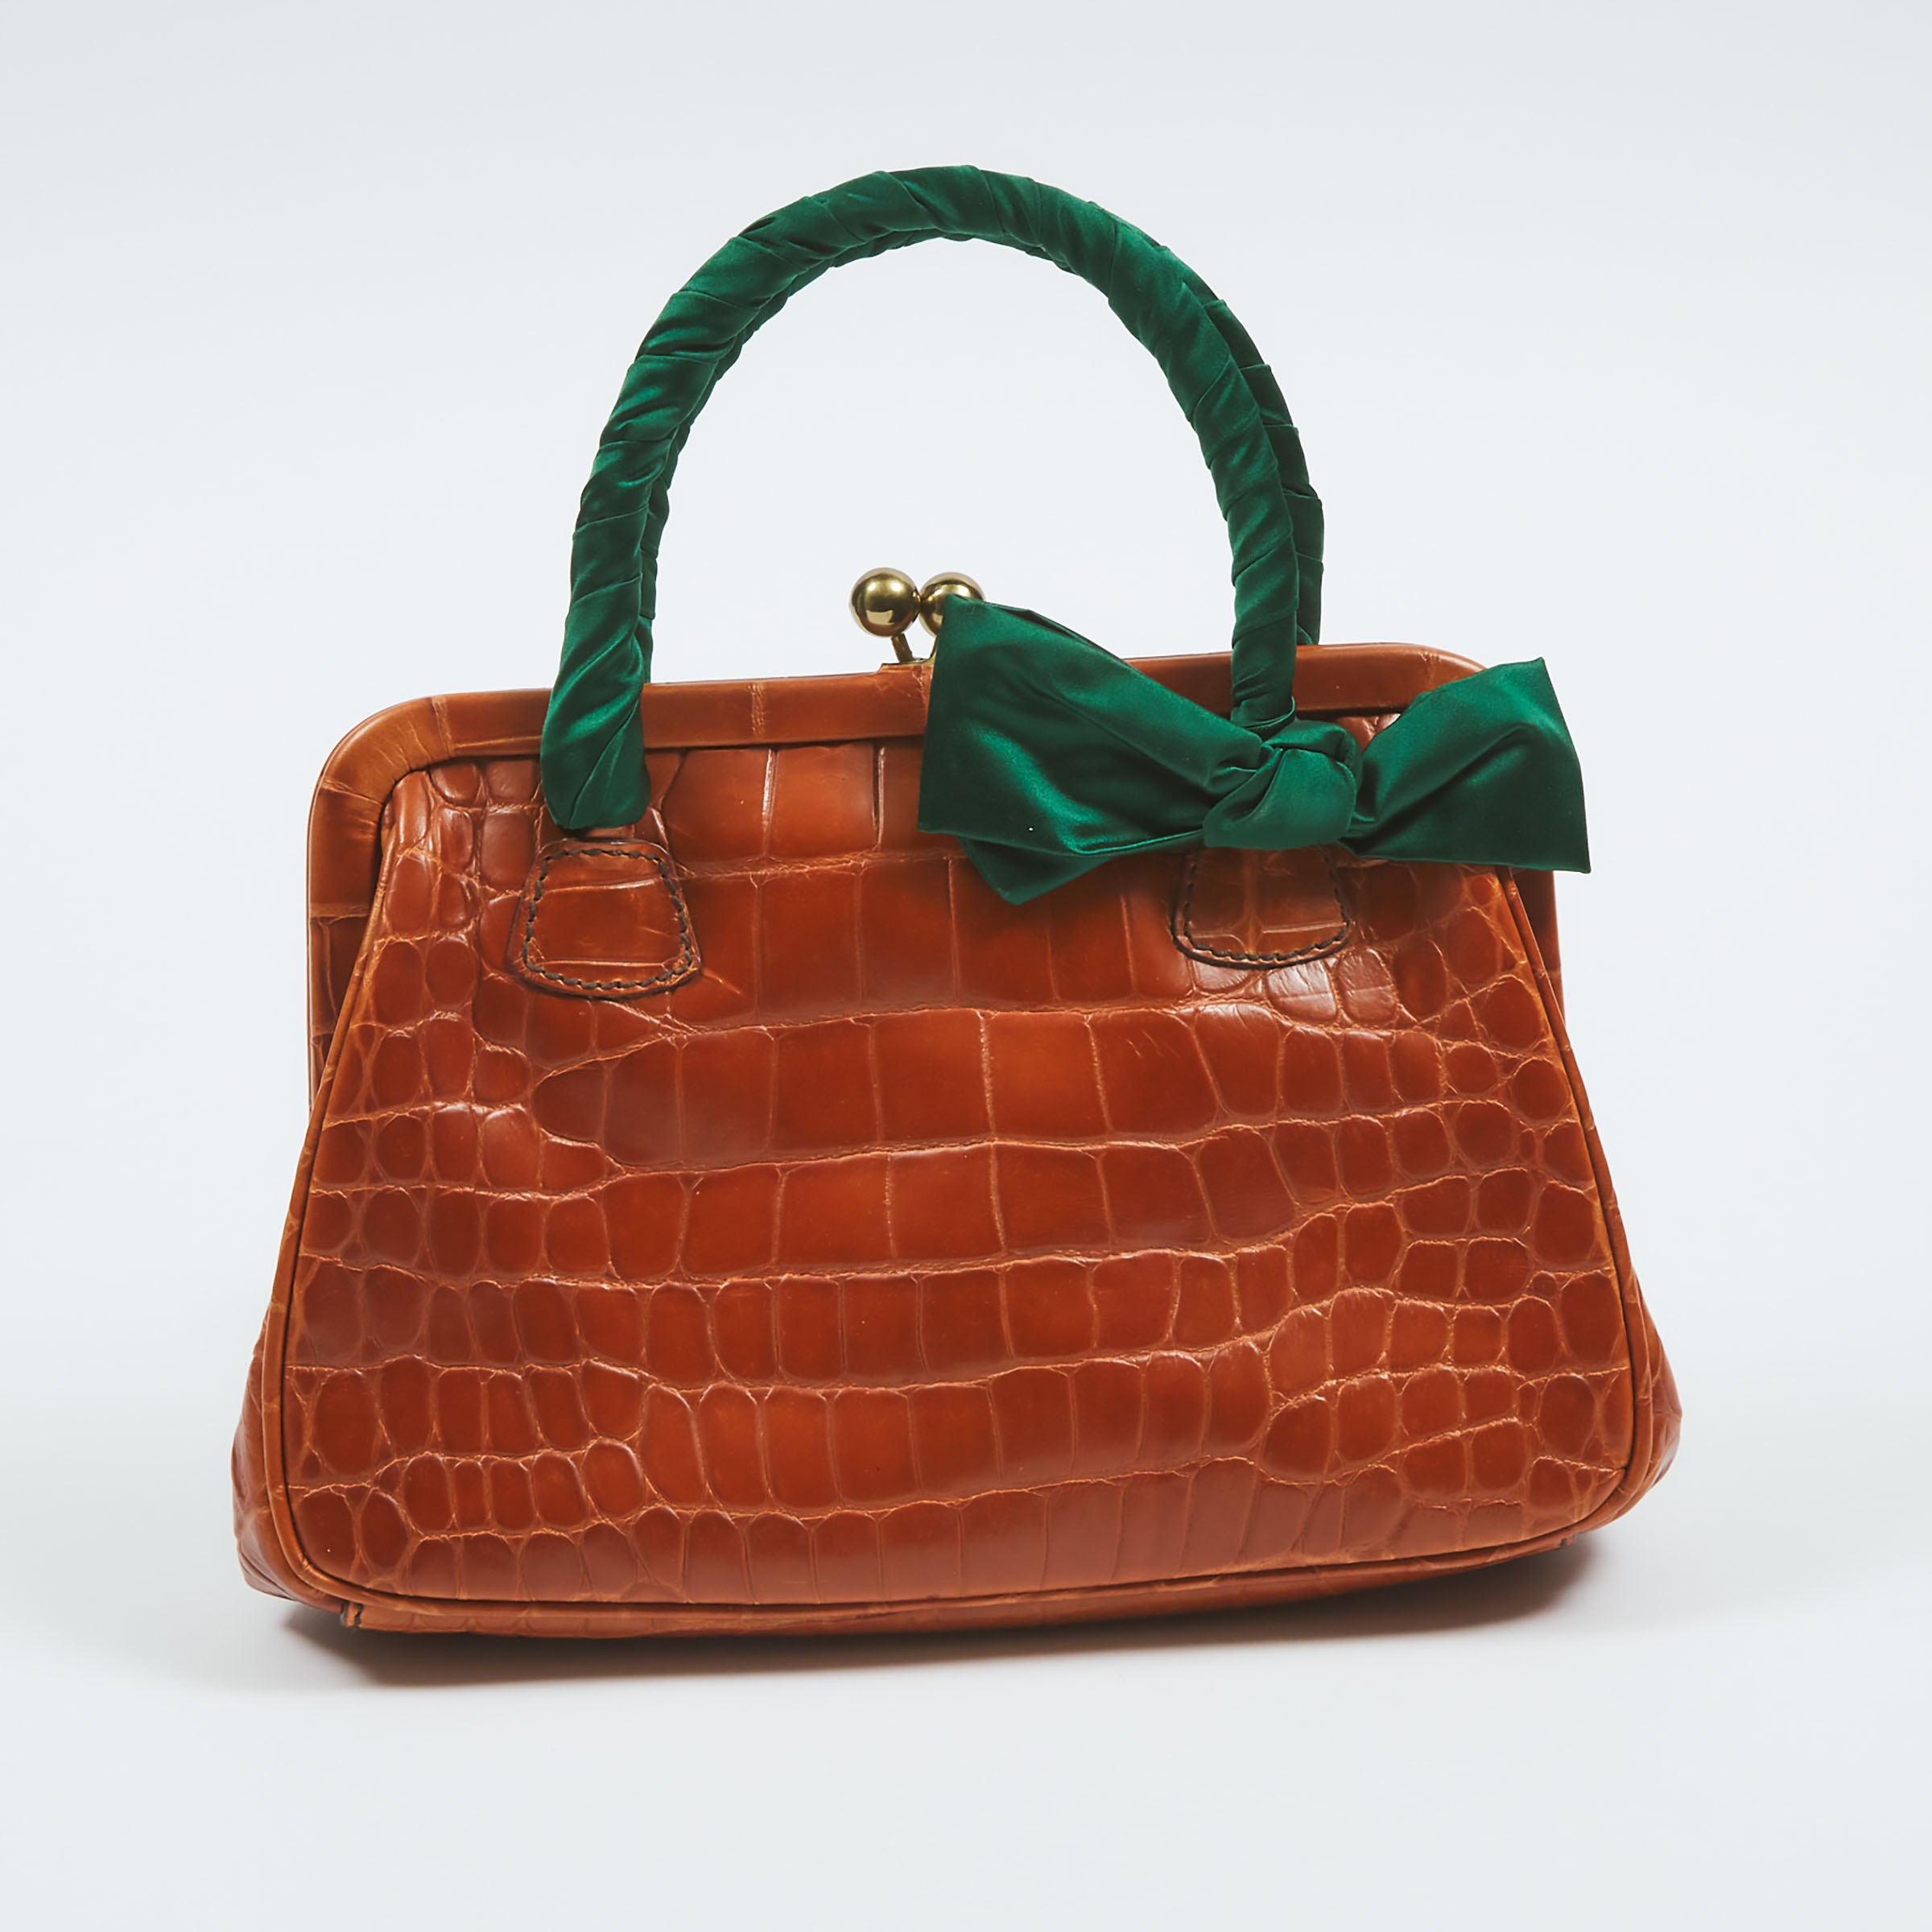 Miu Miu Leather Handbag  with green